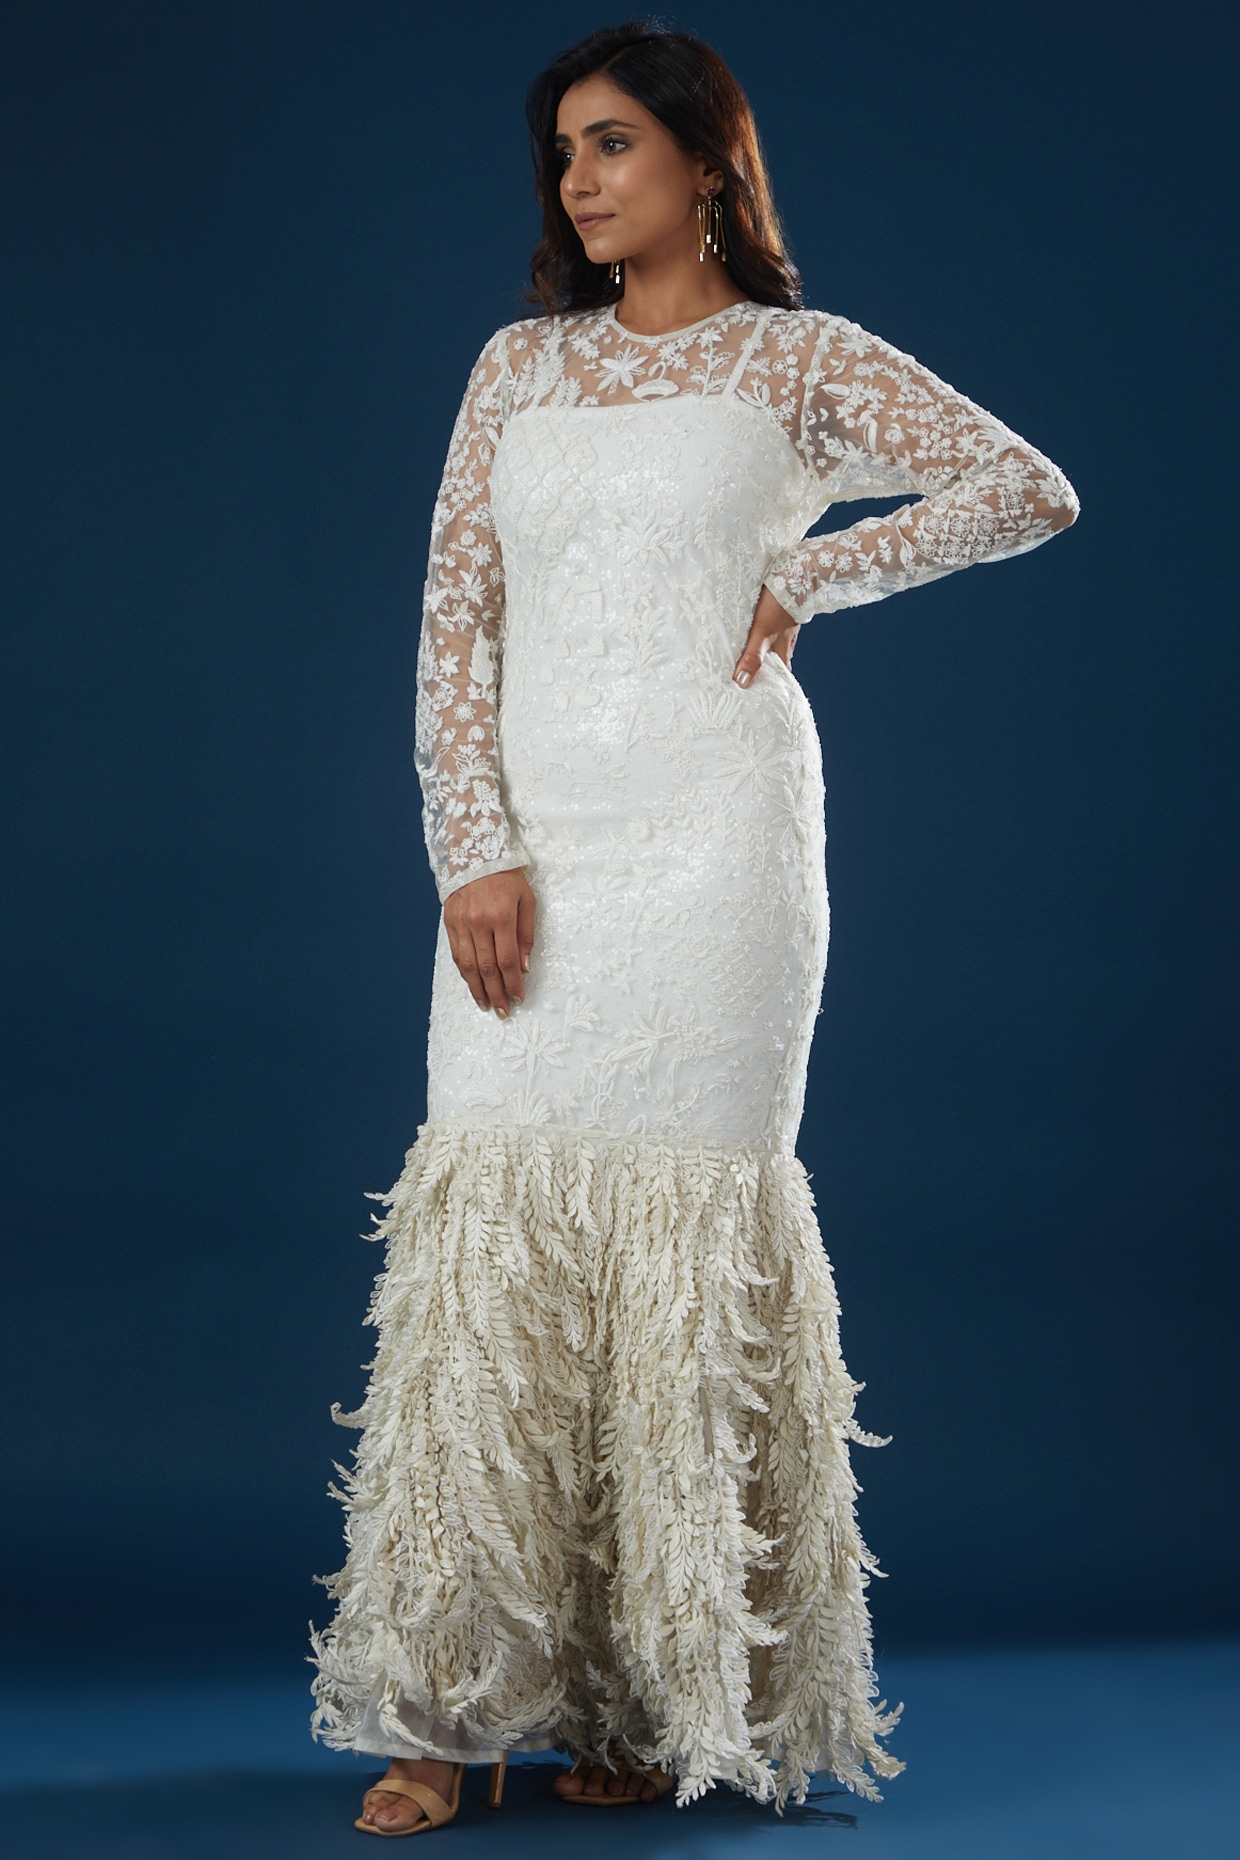 Black & Ivory Beaded Lace Sheer Engagement Dress - Promfy